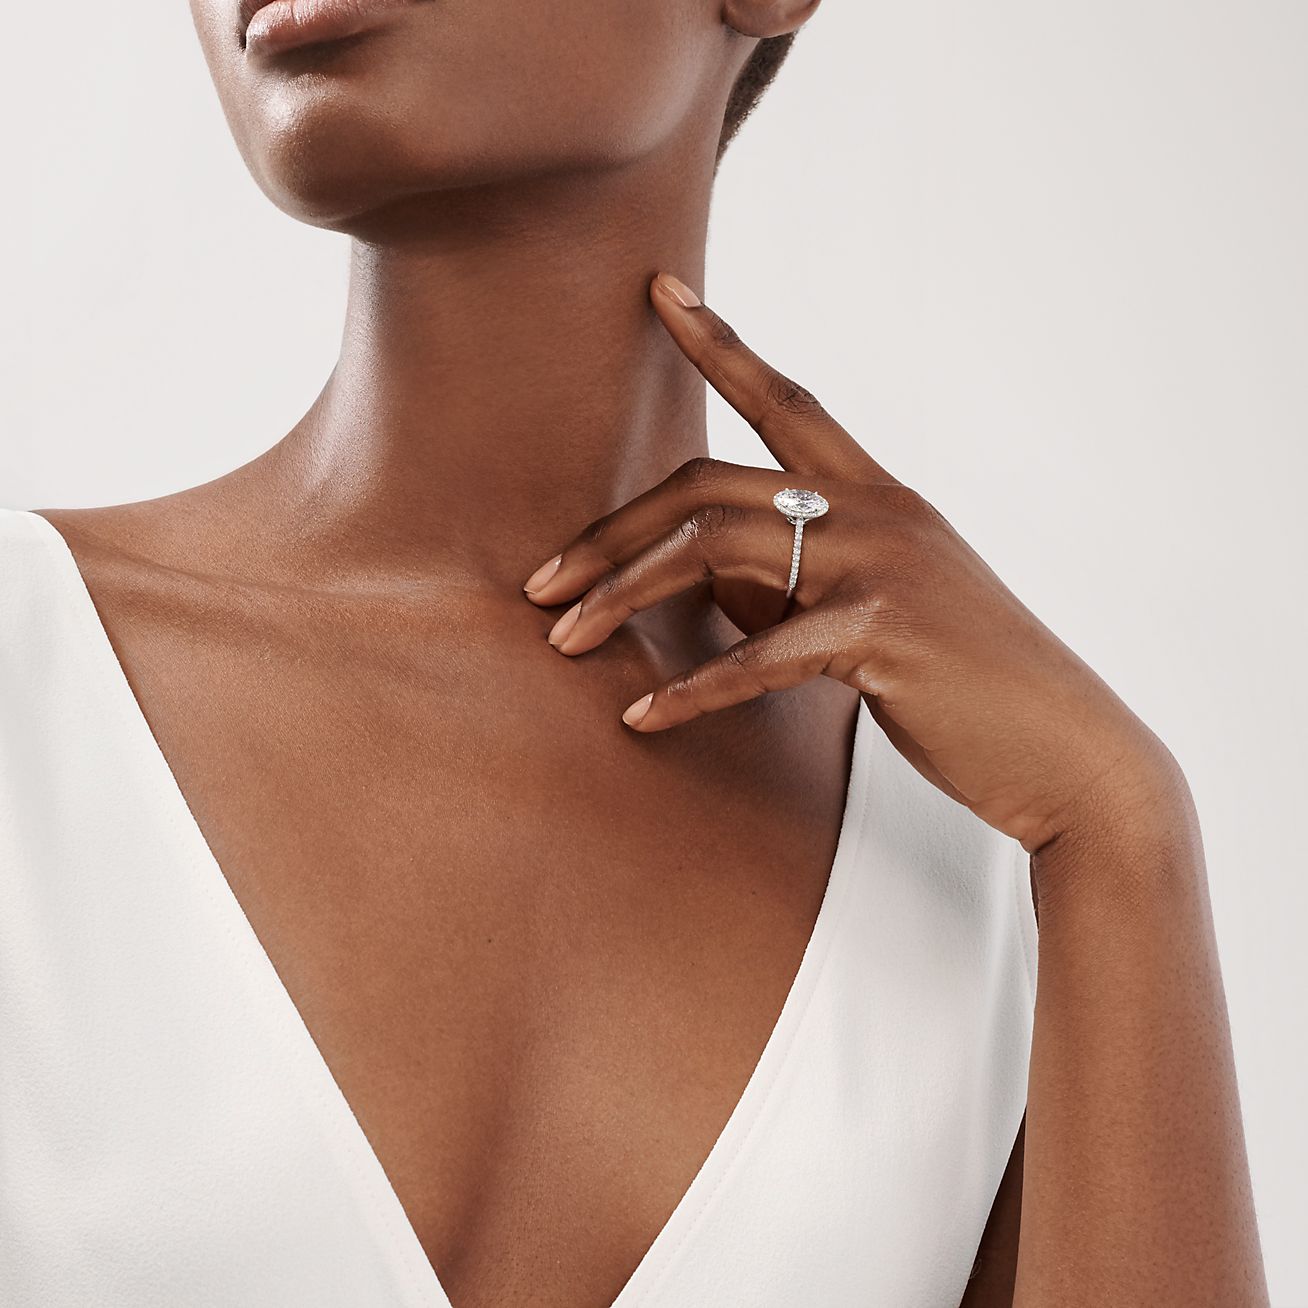 1.53 carat Oval Diamond Classic Halo Engagement Ring | Lauren B Jewelry